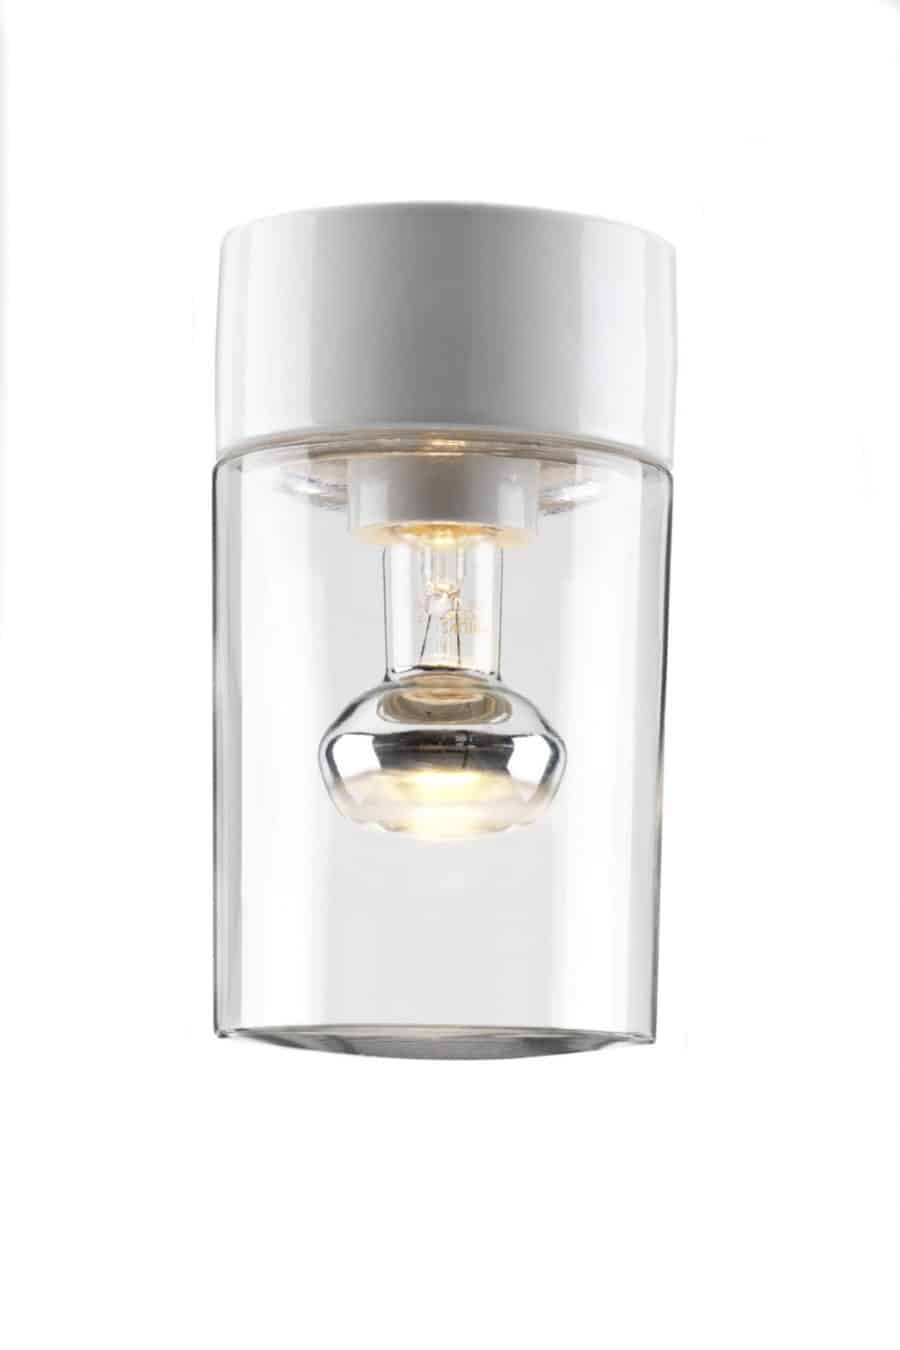 Buitenlamp Opus ifo electric wit opus 120/200 porselein tuinextra helder glas